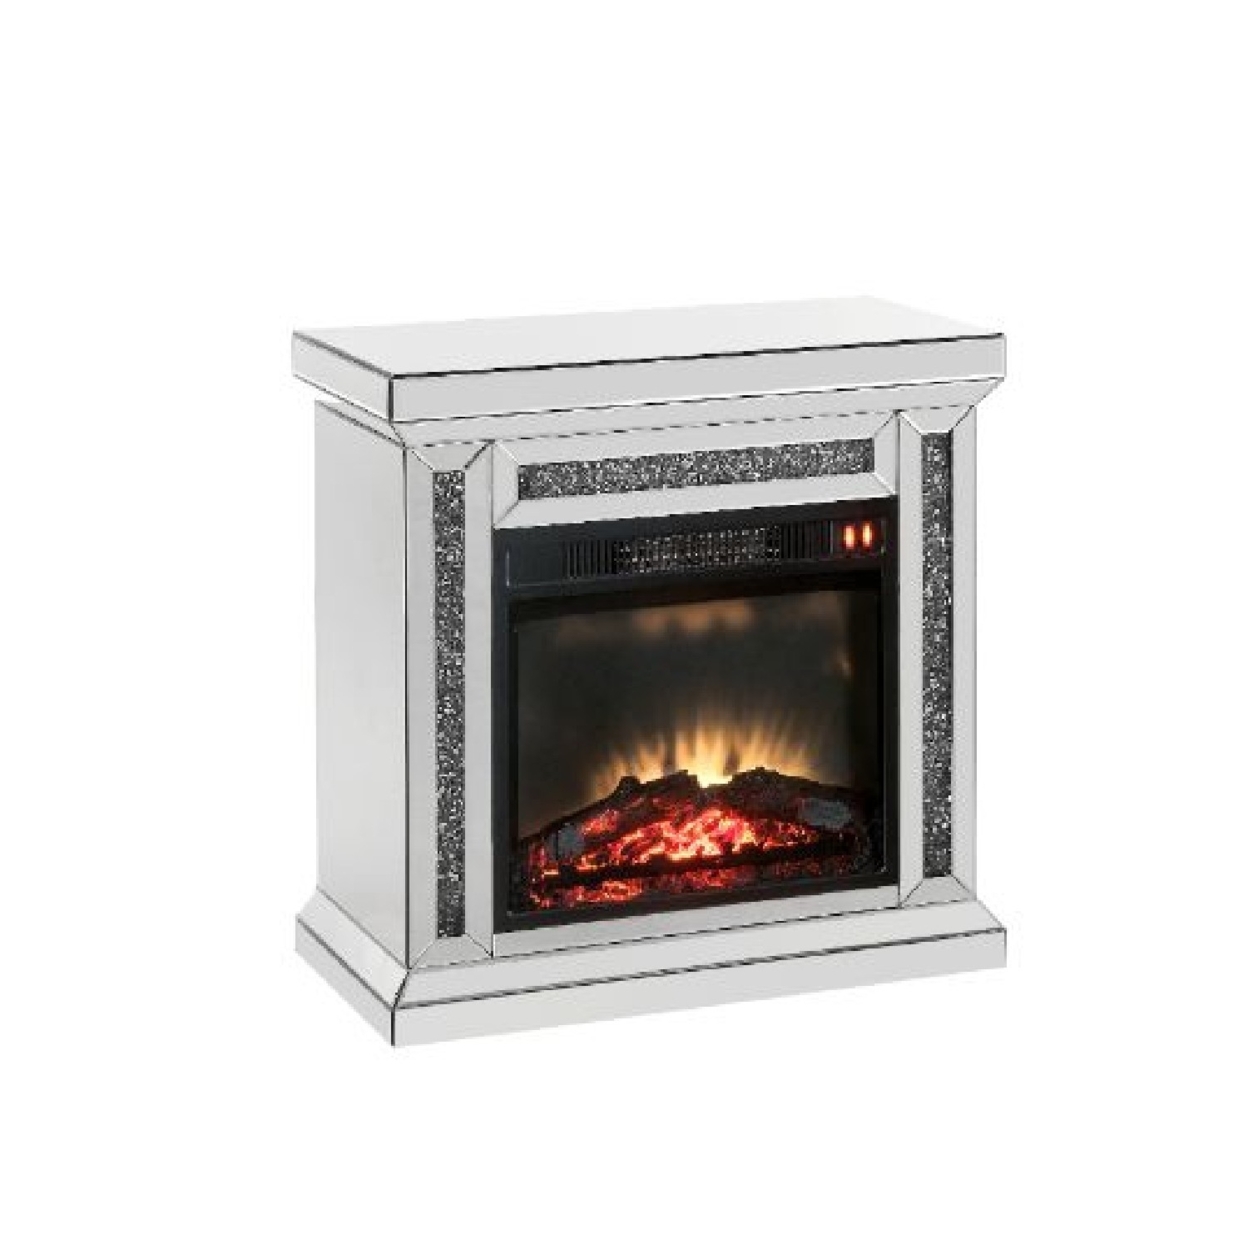 LED Electric Fireplace With Faux Diamond Inlays, Silver- Saltoro Sherpi